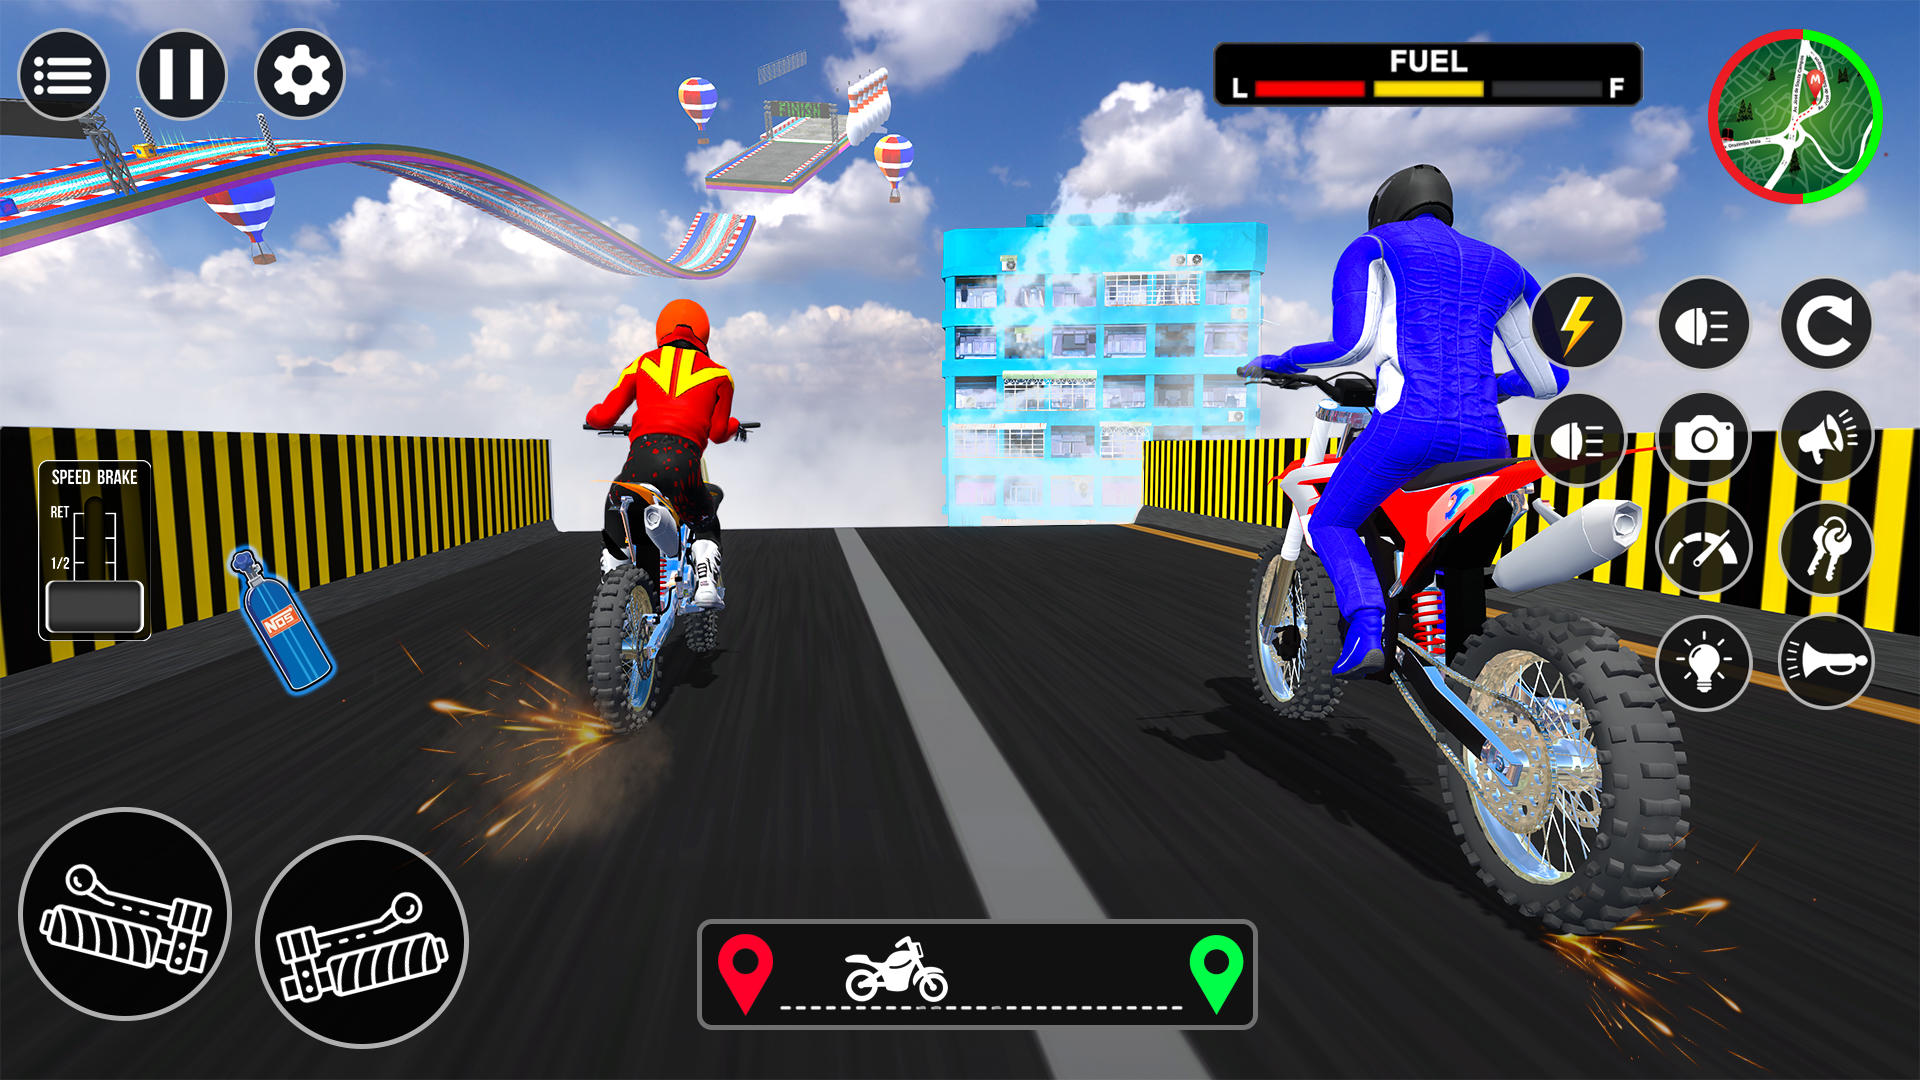 Motox3 Bike Racer Simulationのキャプチャ